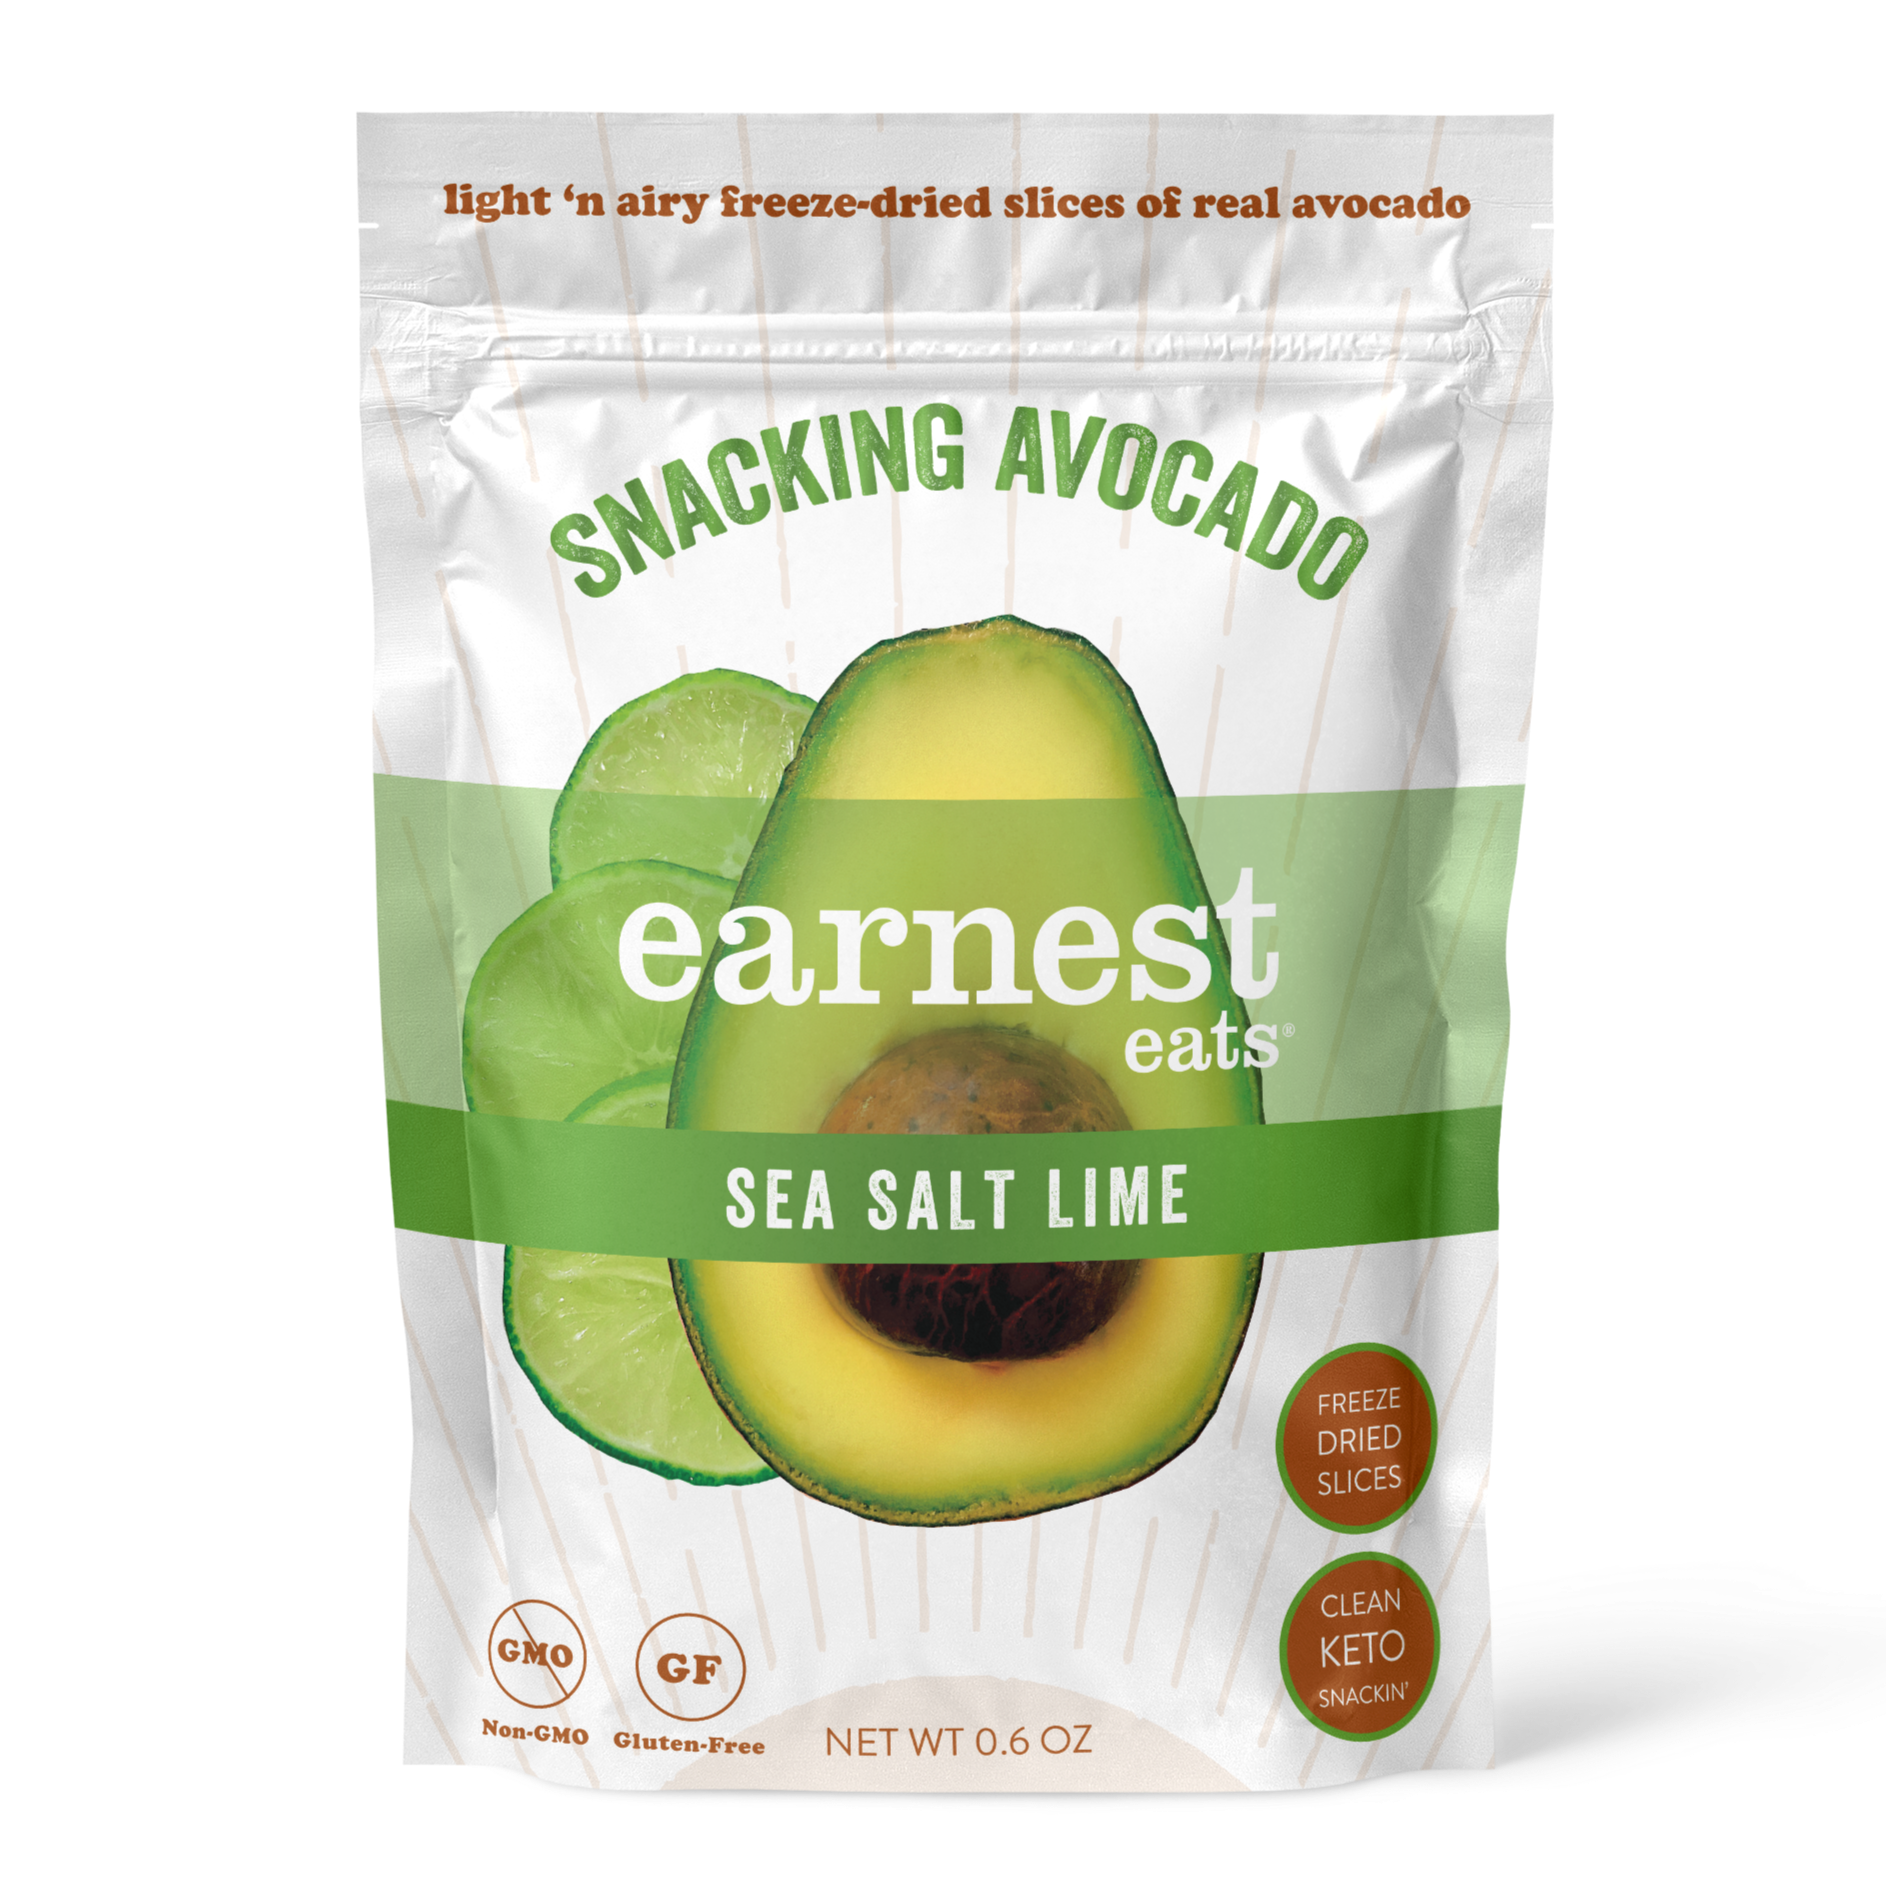 Sea Salt Lime Snacking Avocado